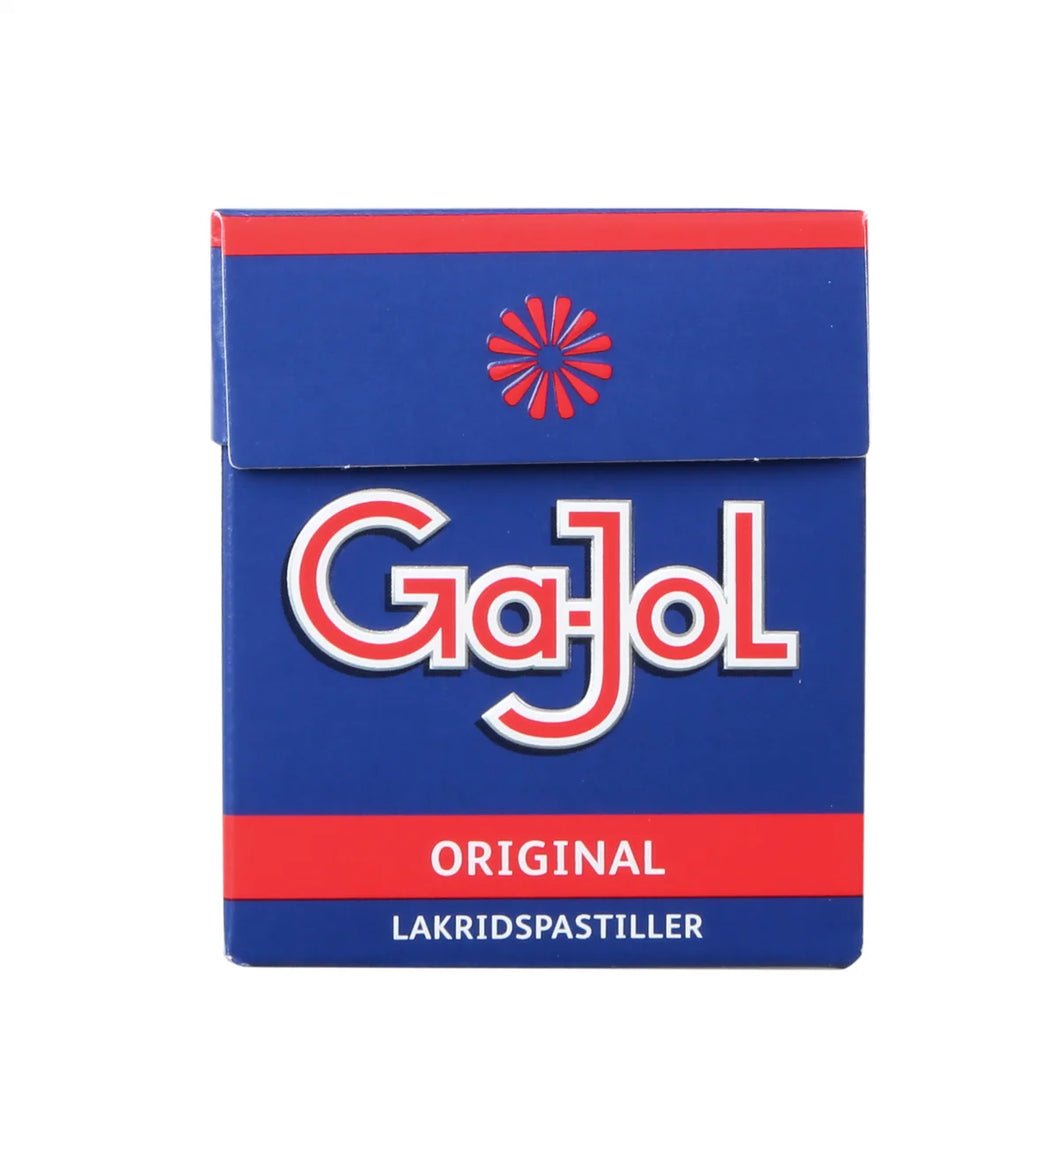 Gajol Original (BLÅ)